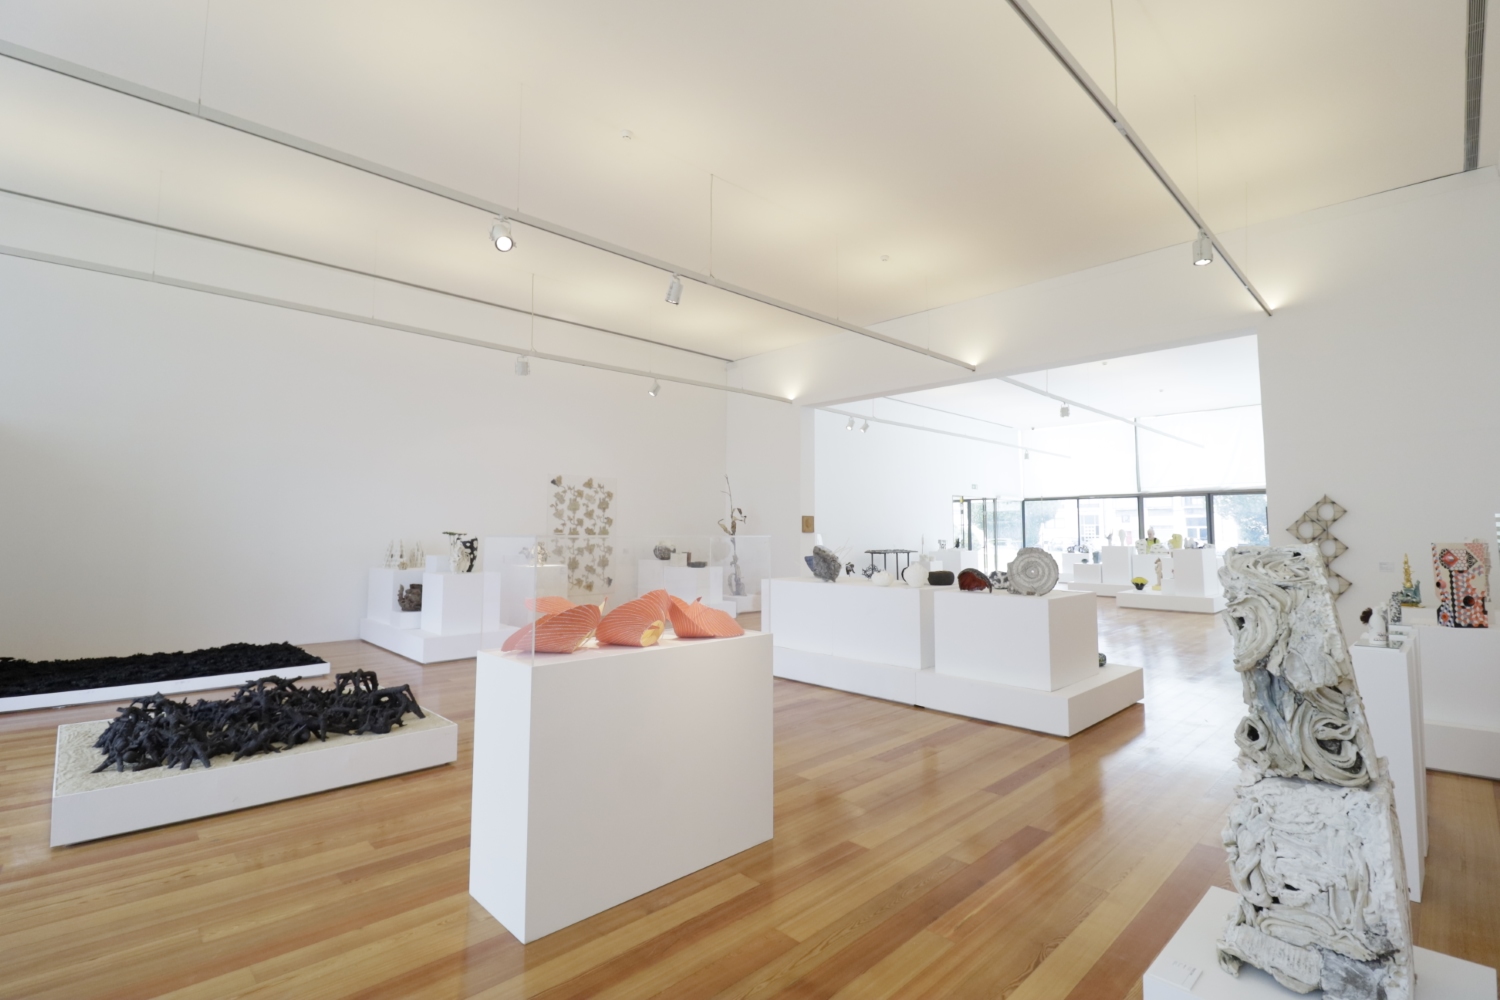 The 16th International Biennial of Artistic Ceramics of Aveiro